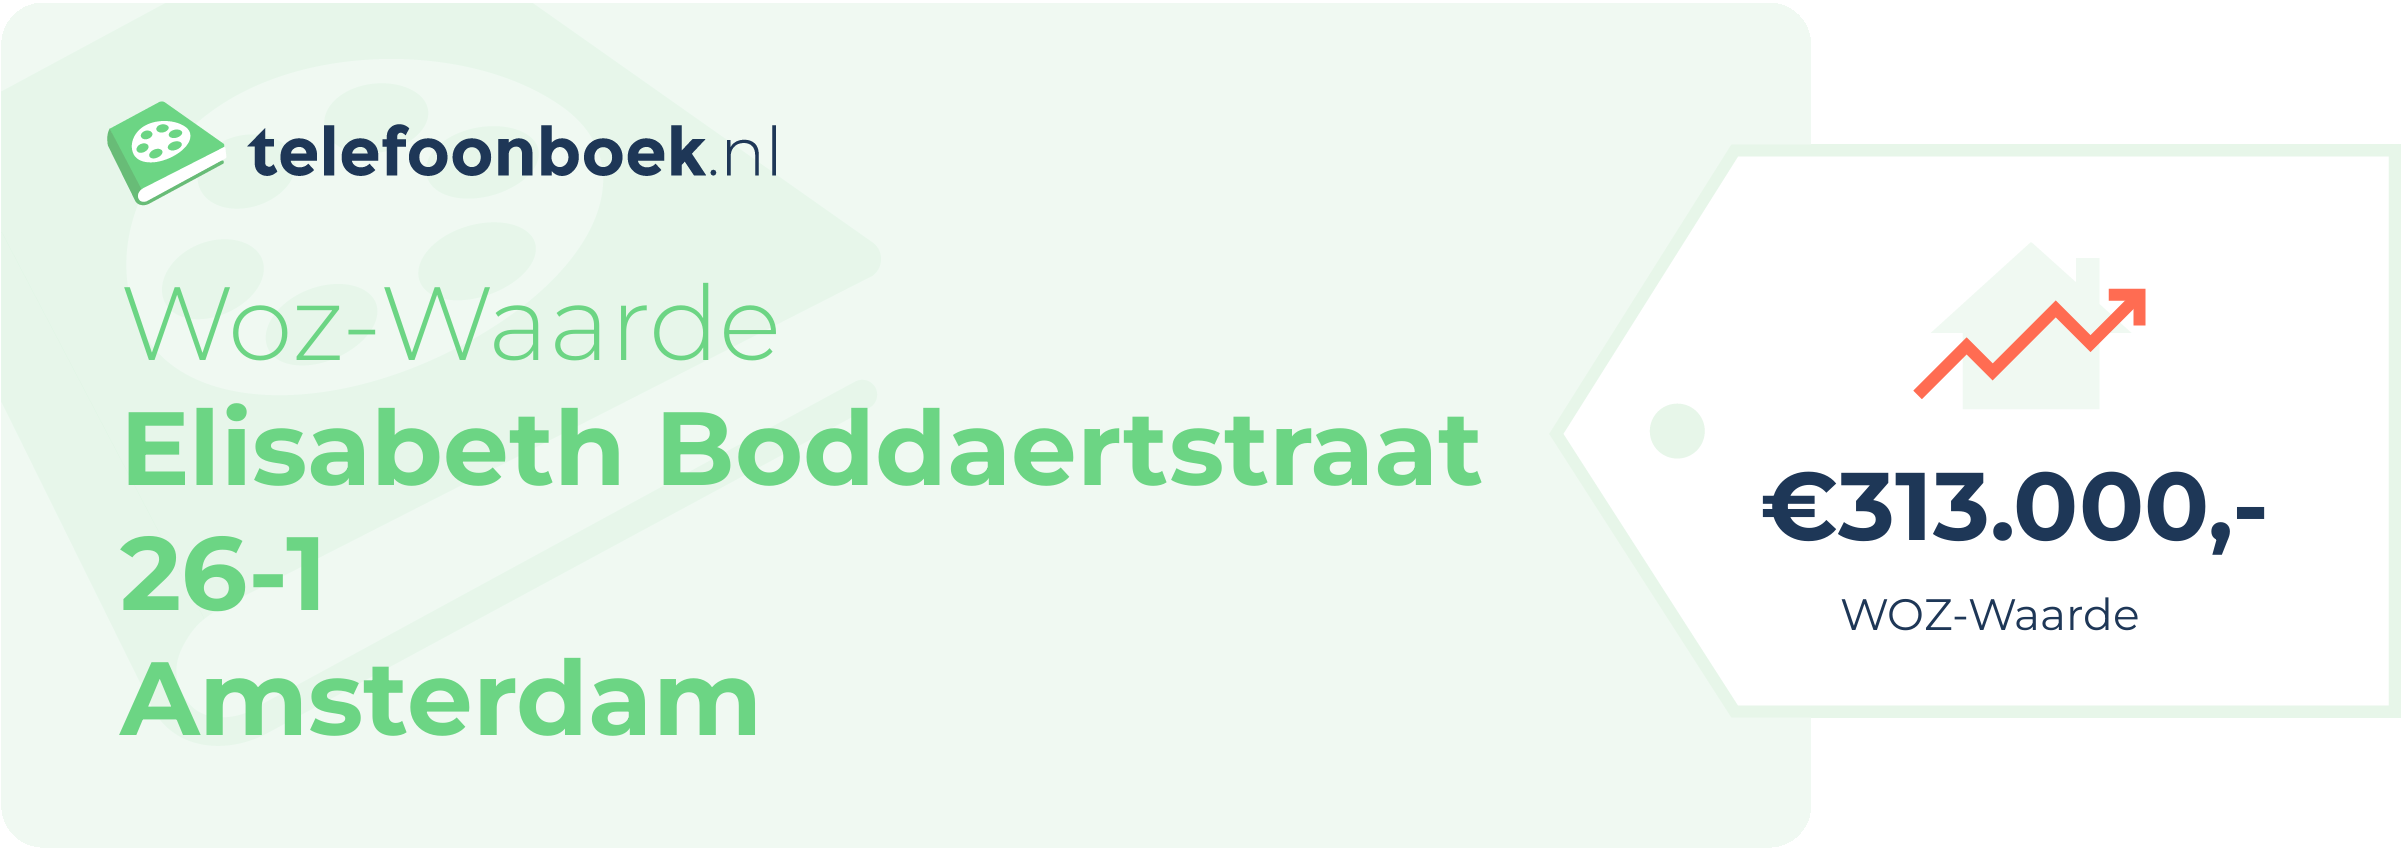 WOZ-waarde Elisabeth Boddaertstraat 26-1 Amsterdam